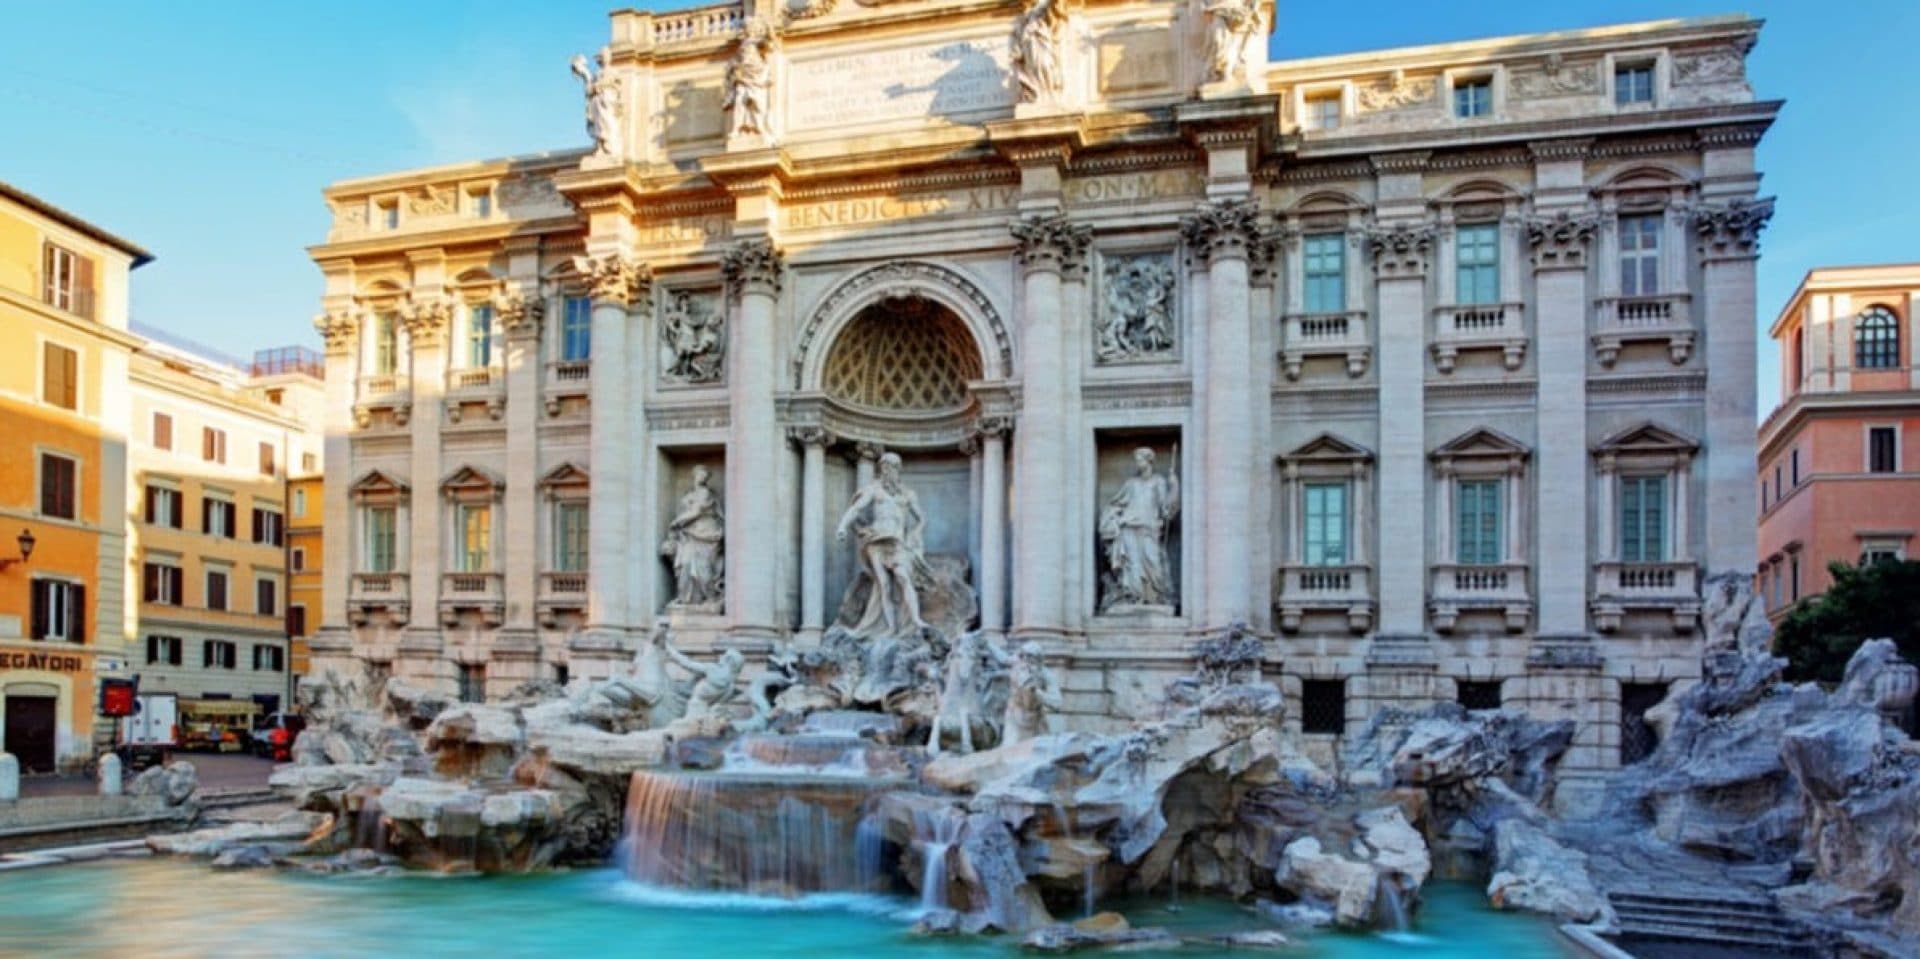 Hilti jobsite reference trevi fountain Rome Italy